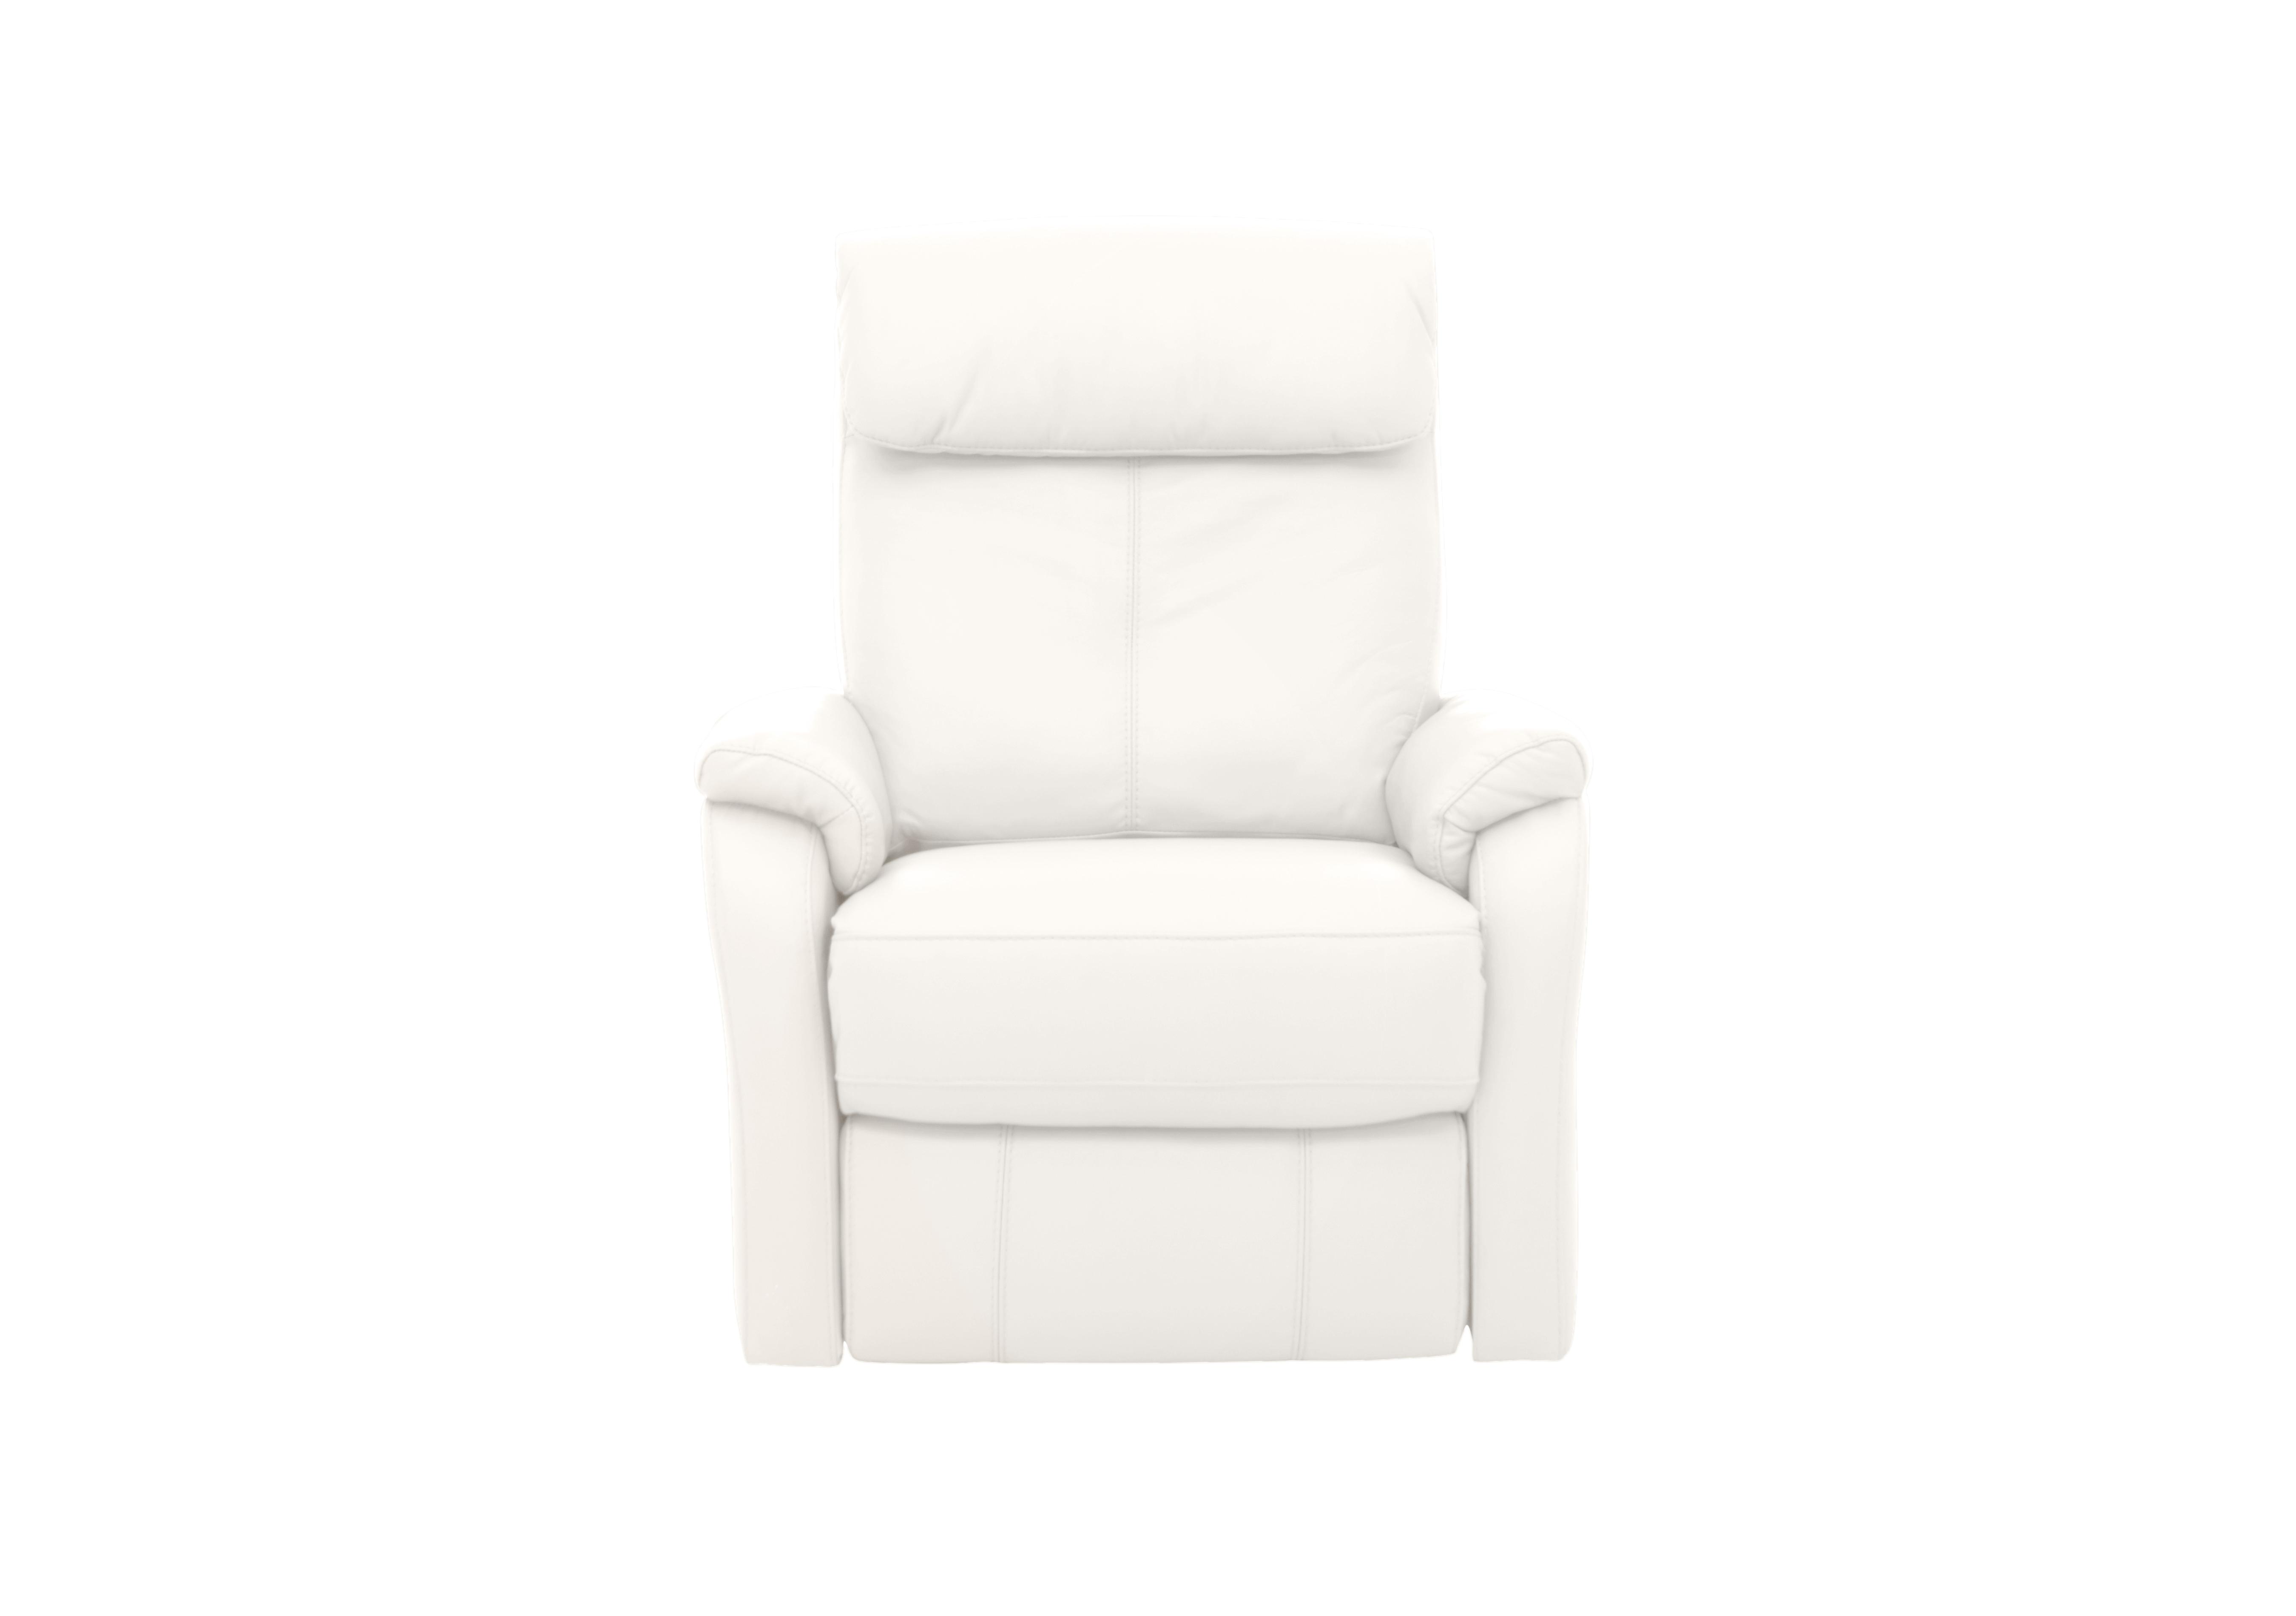 Rowan Leather Swivel Rocker Recliner Armchair in Bv-744d Star White on Furniture Village